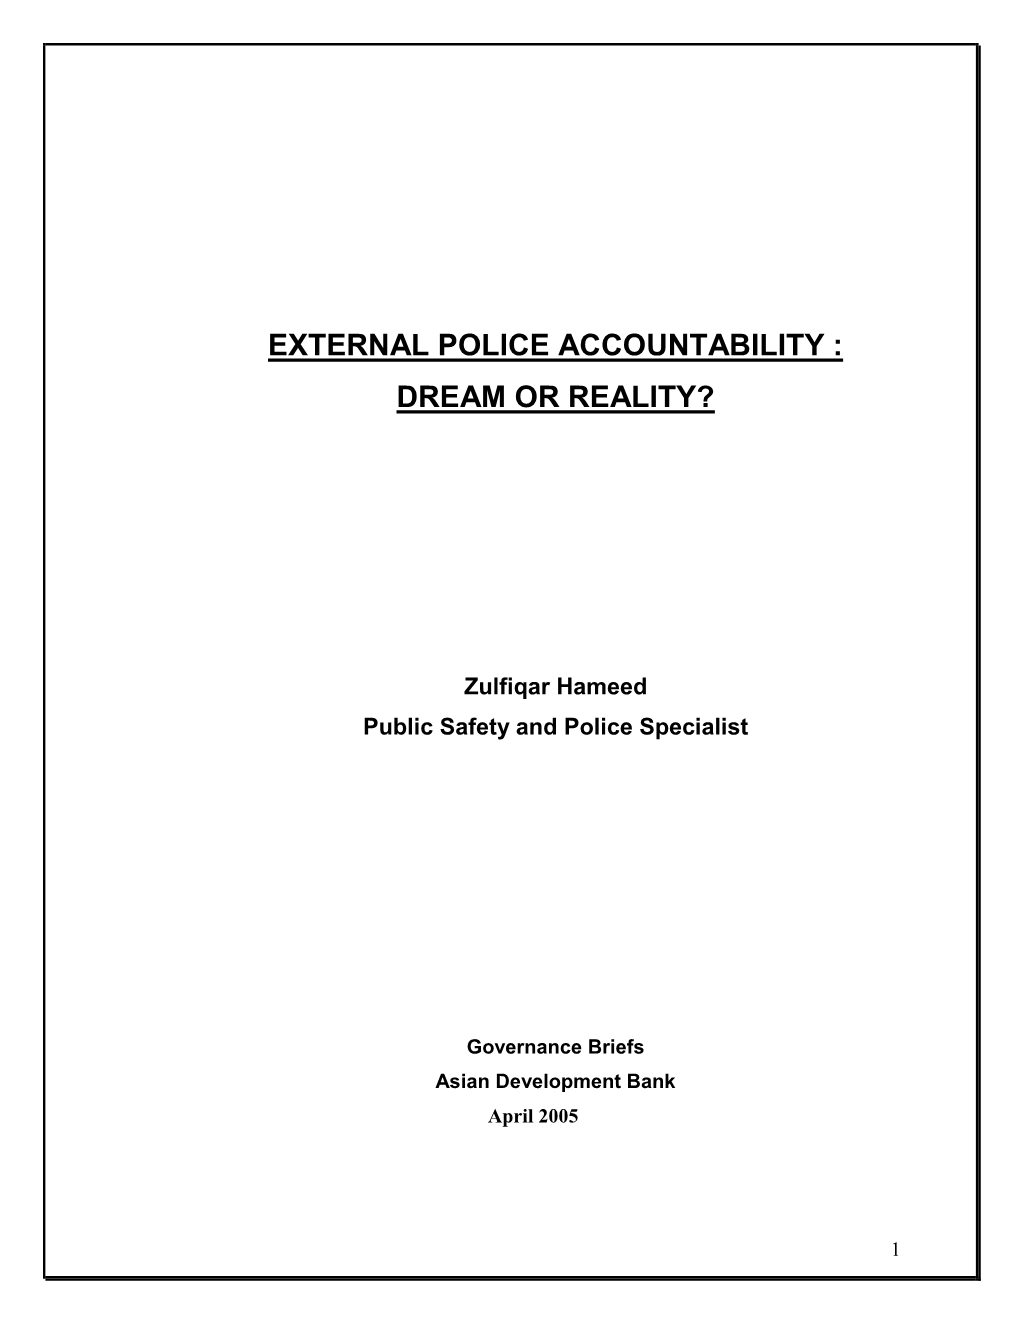 External Police Accountability : Dream Or Reality?